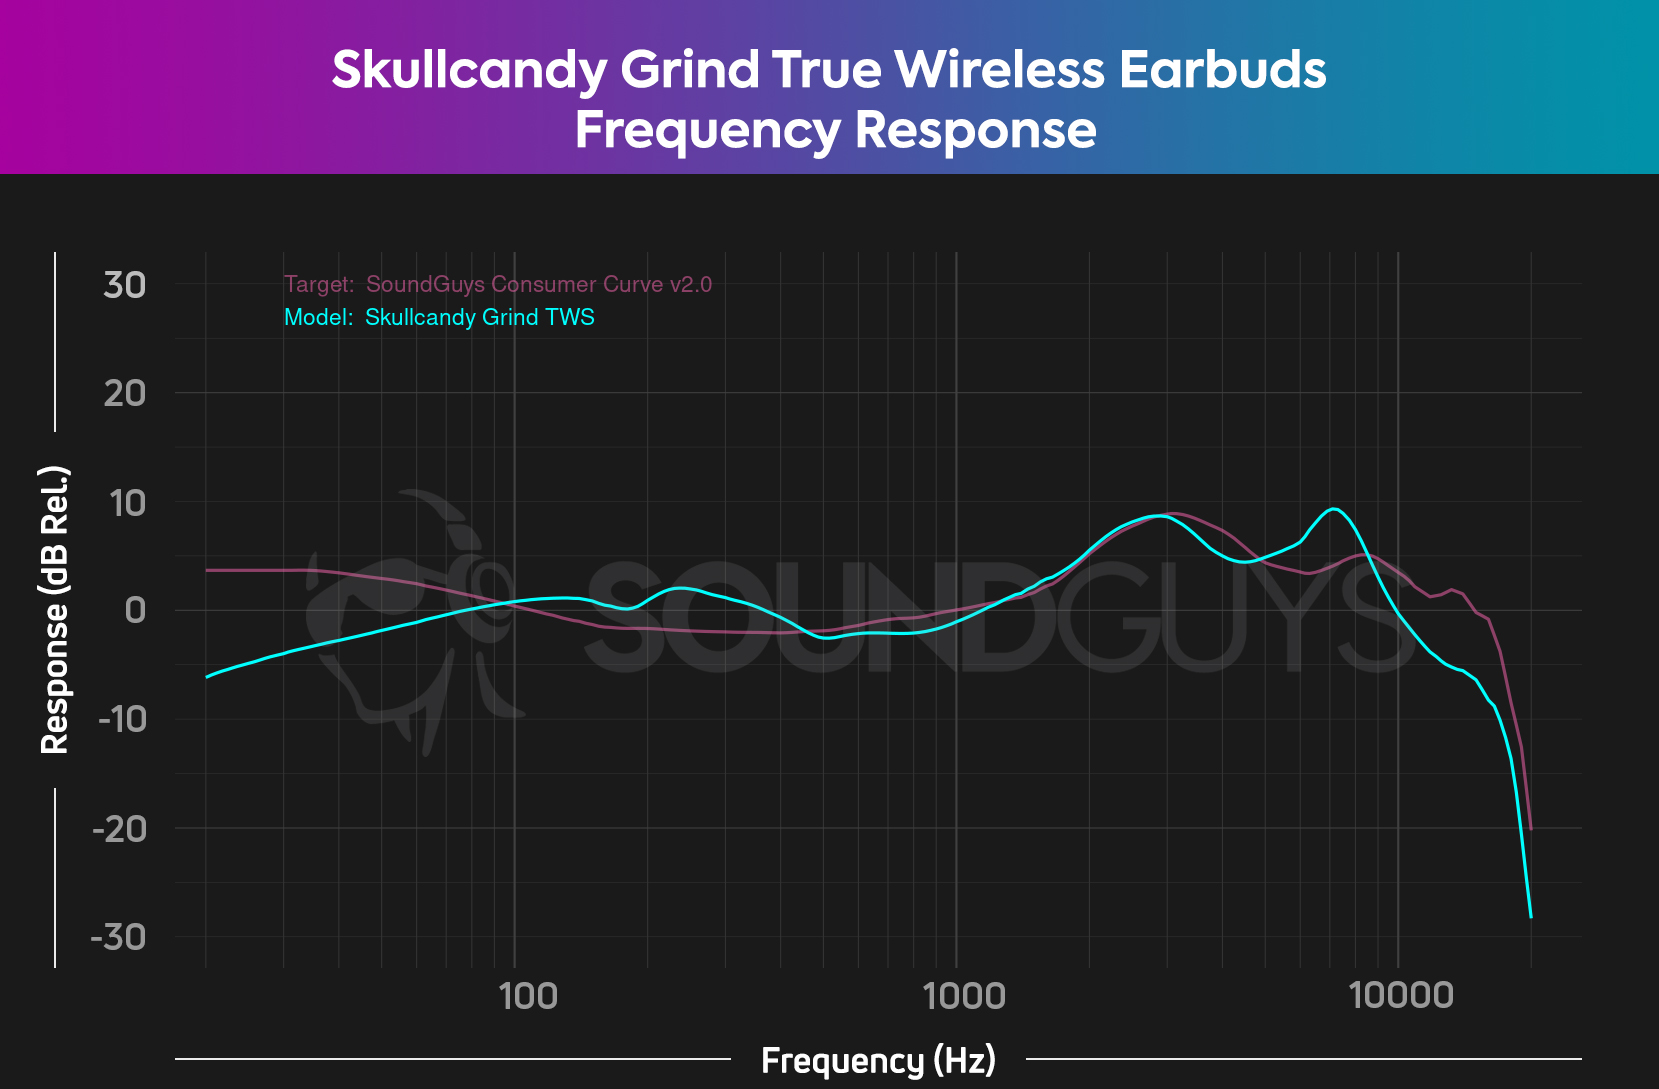 Skullcandy Grind True Wireless Earbuds frequency response chart.